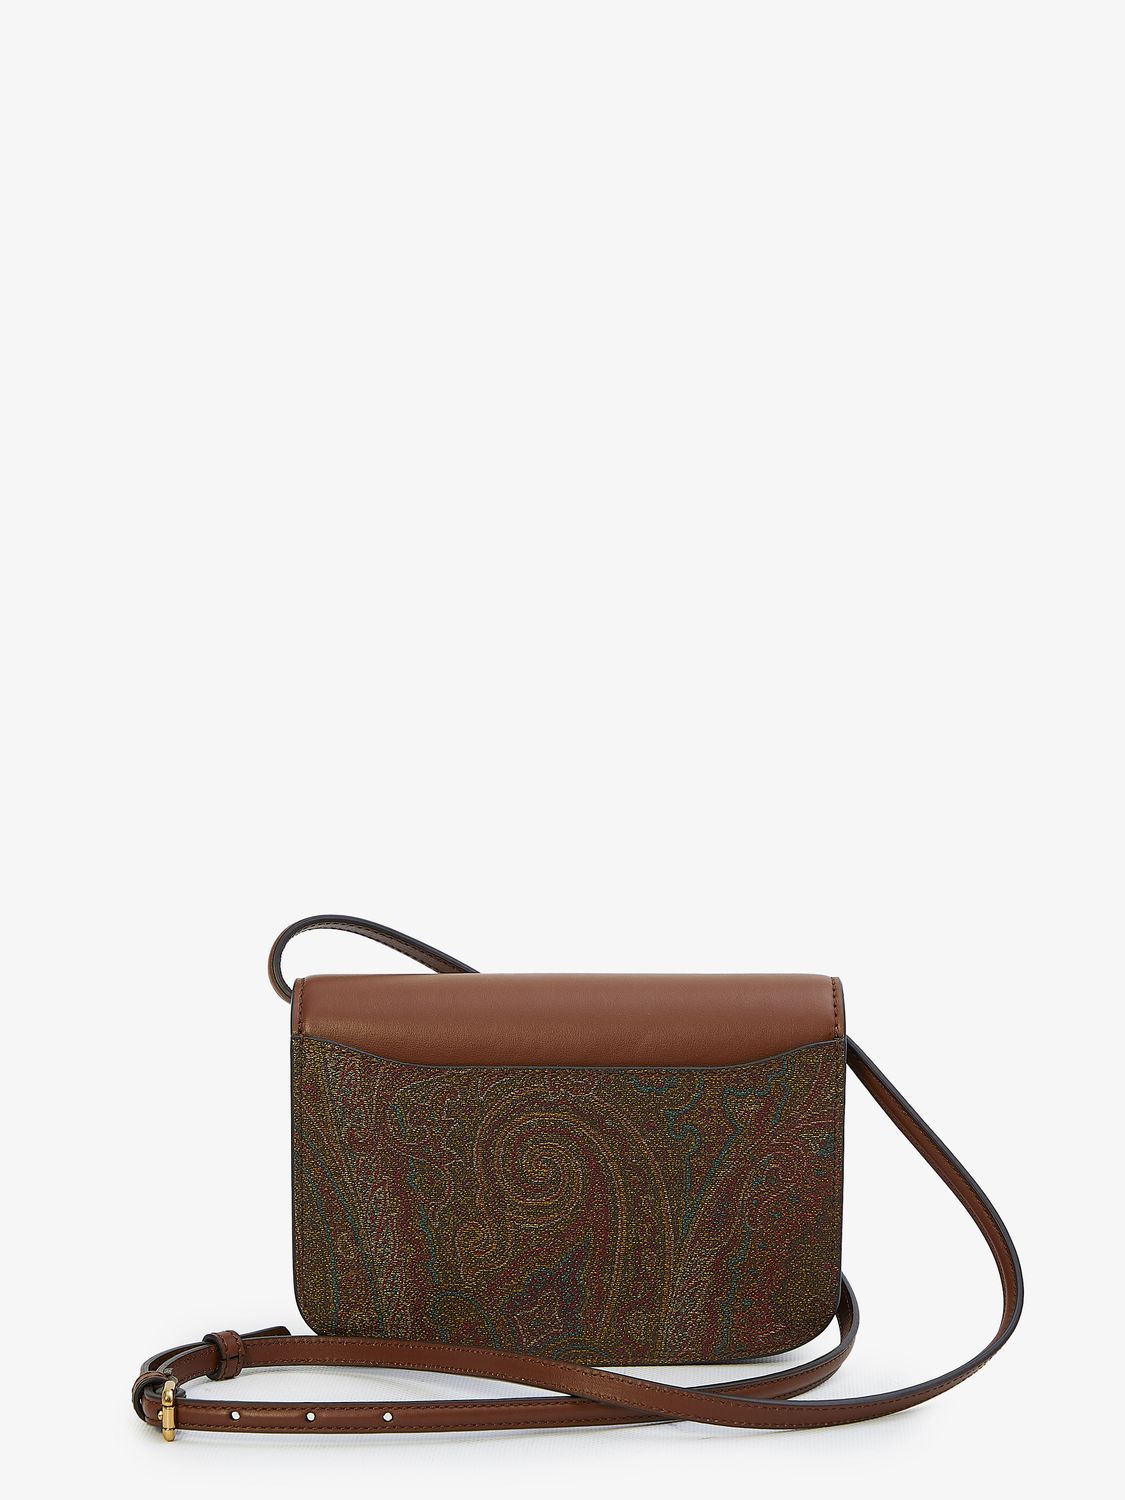 ETRO Paisley Jacquard Mini Crossbody Handbag with Leather Flap - Brown, Adjustable Strap, 19x14x4.5cm